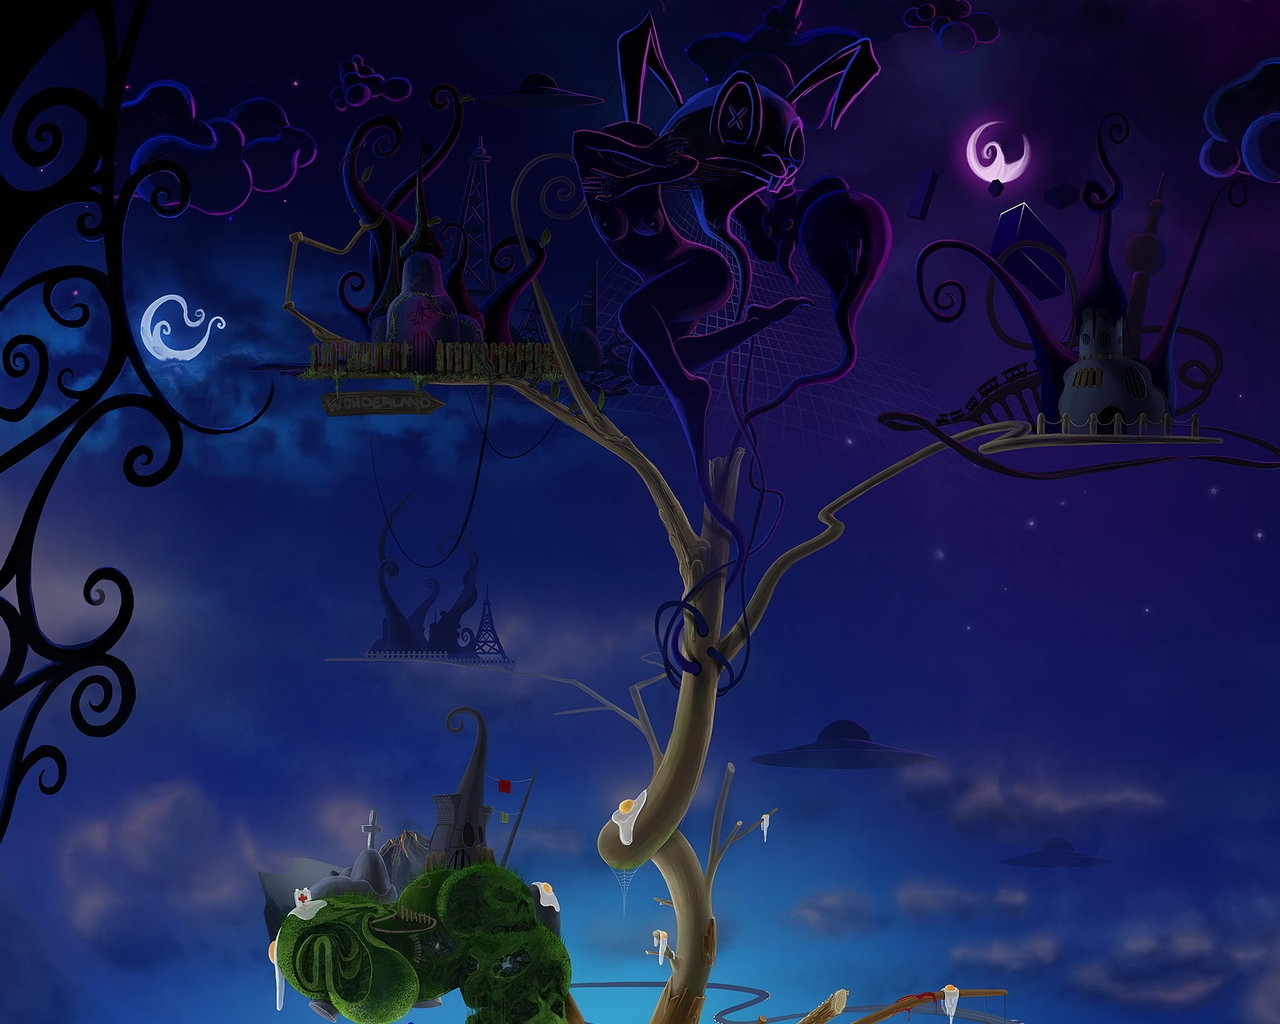 Night in Wonderland for 1280 x 1024 resolution